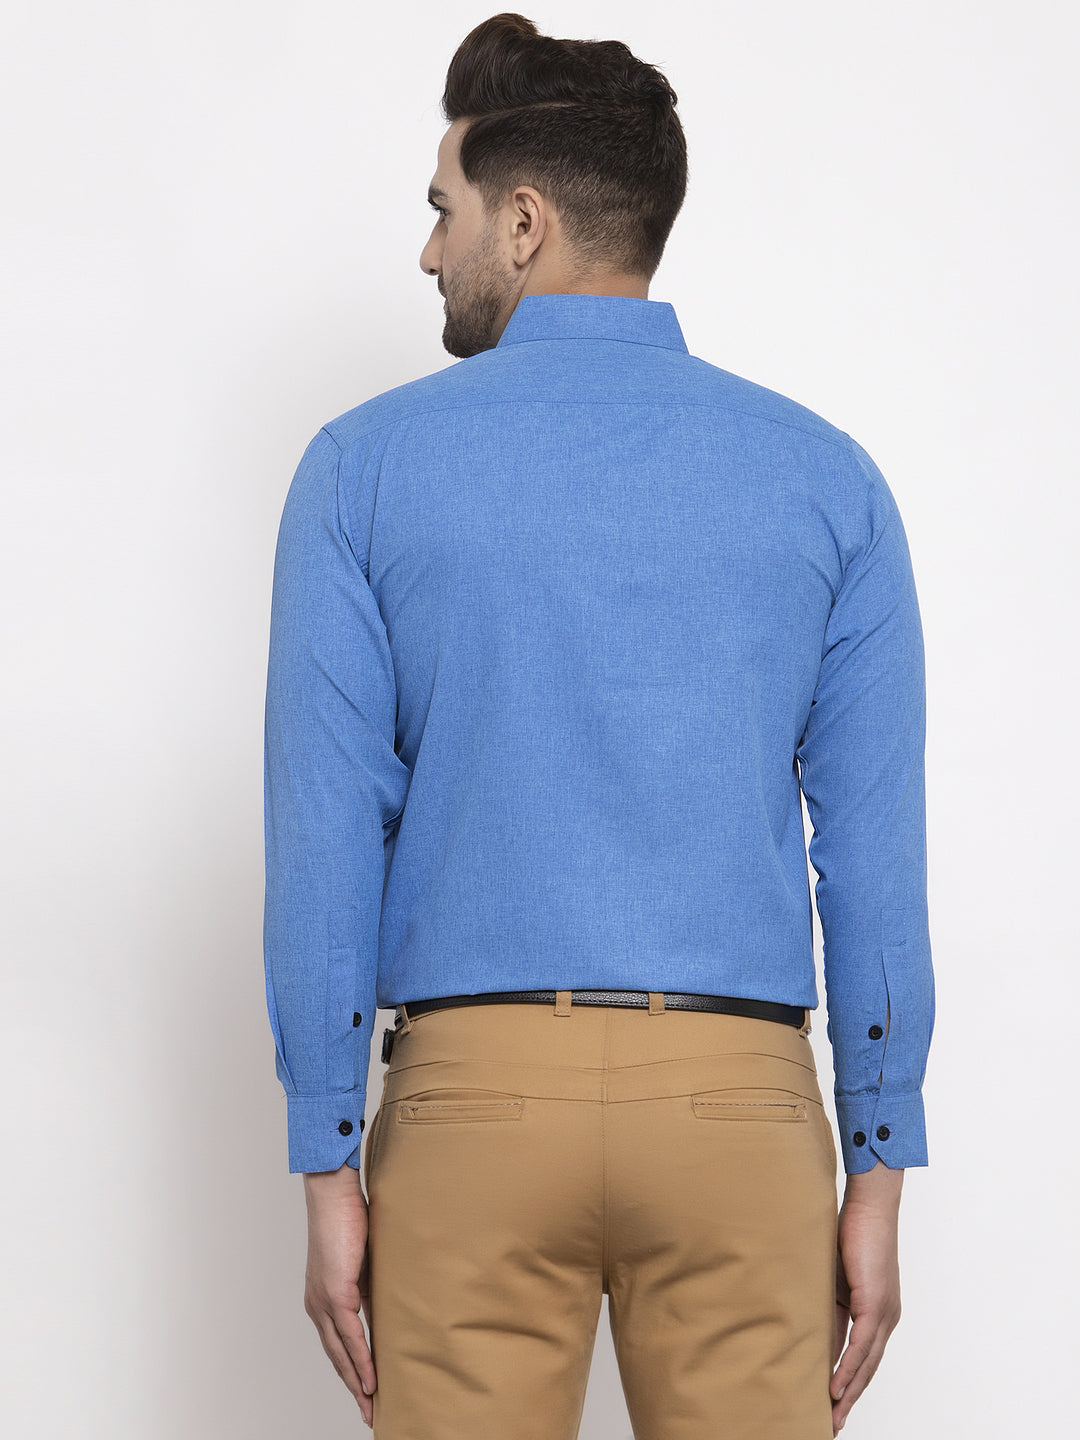 Men's Blue Cotton Solid Button Down Formal Shirts ( SF 734Blue ) - Jainish